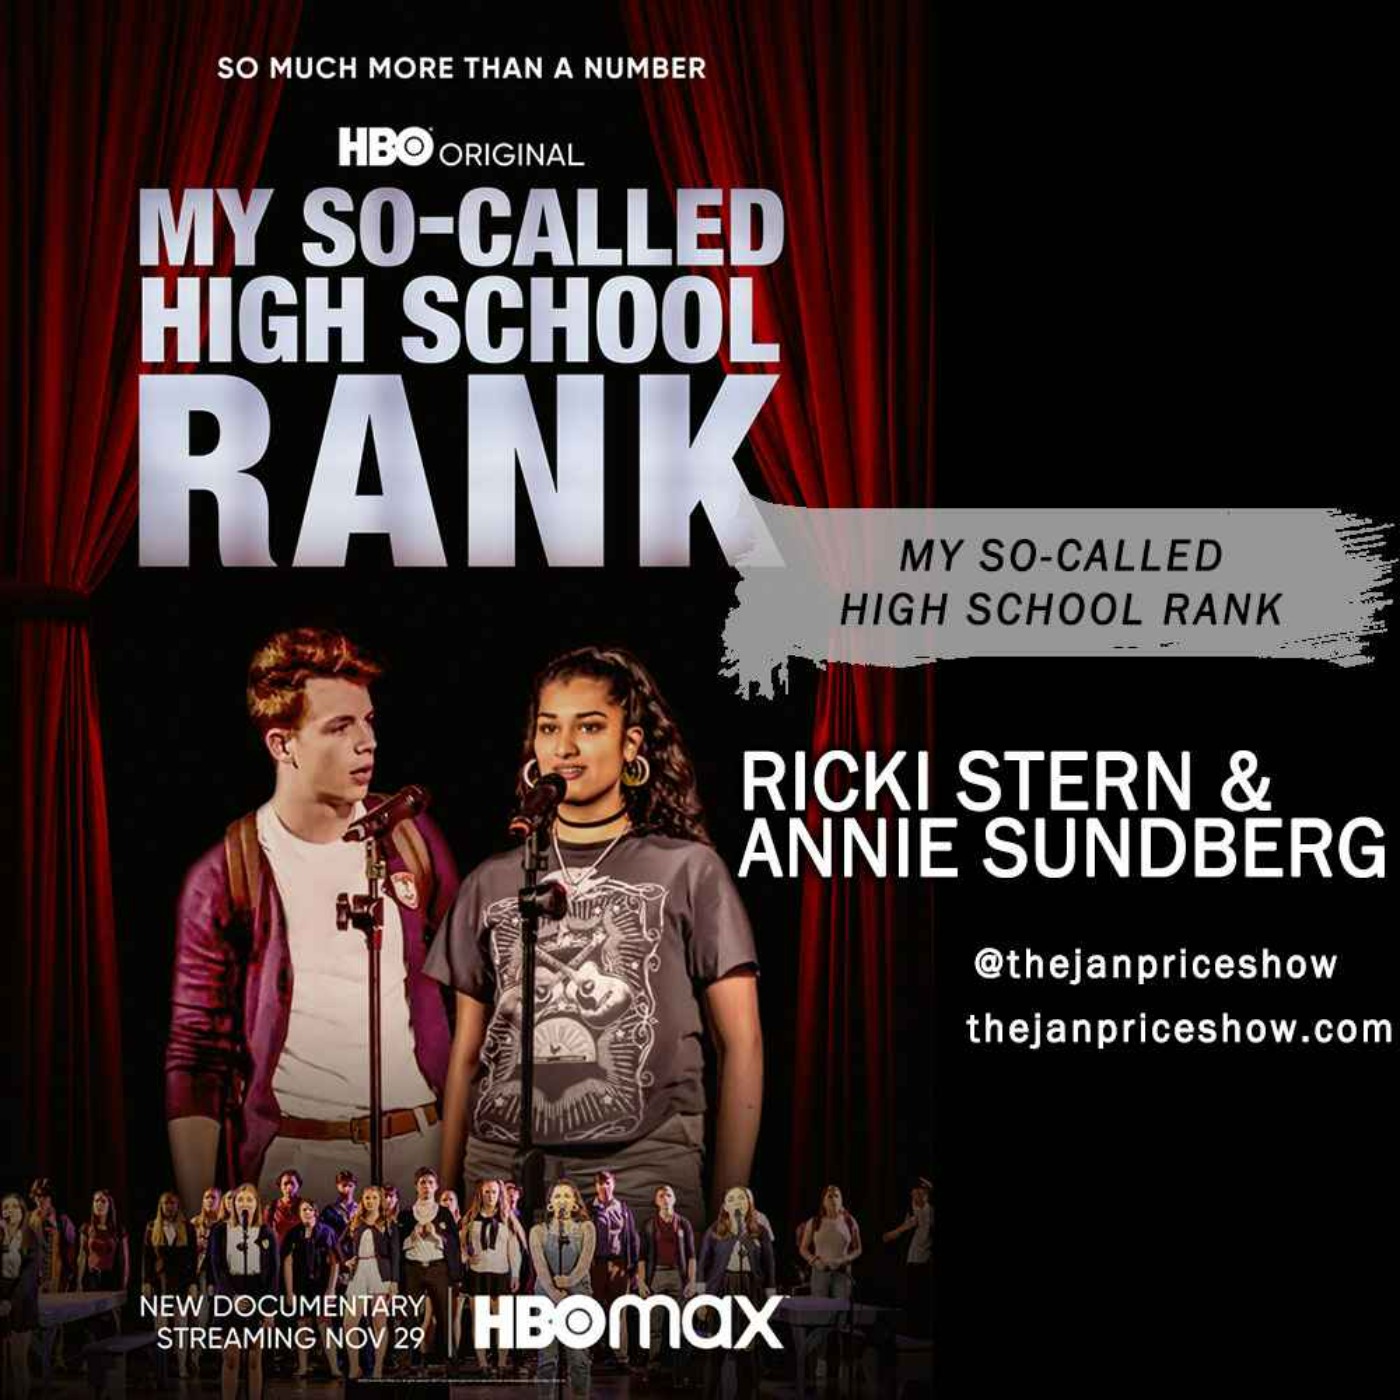 Ricki Stern and Annie Sundberg - My So-Called High School Rank